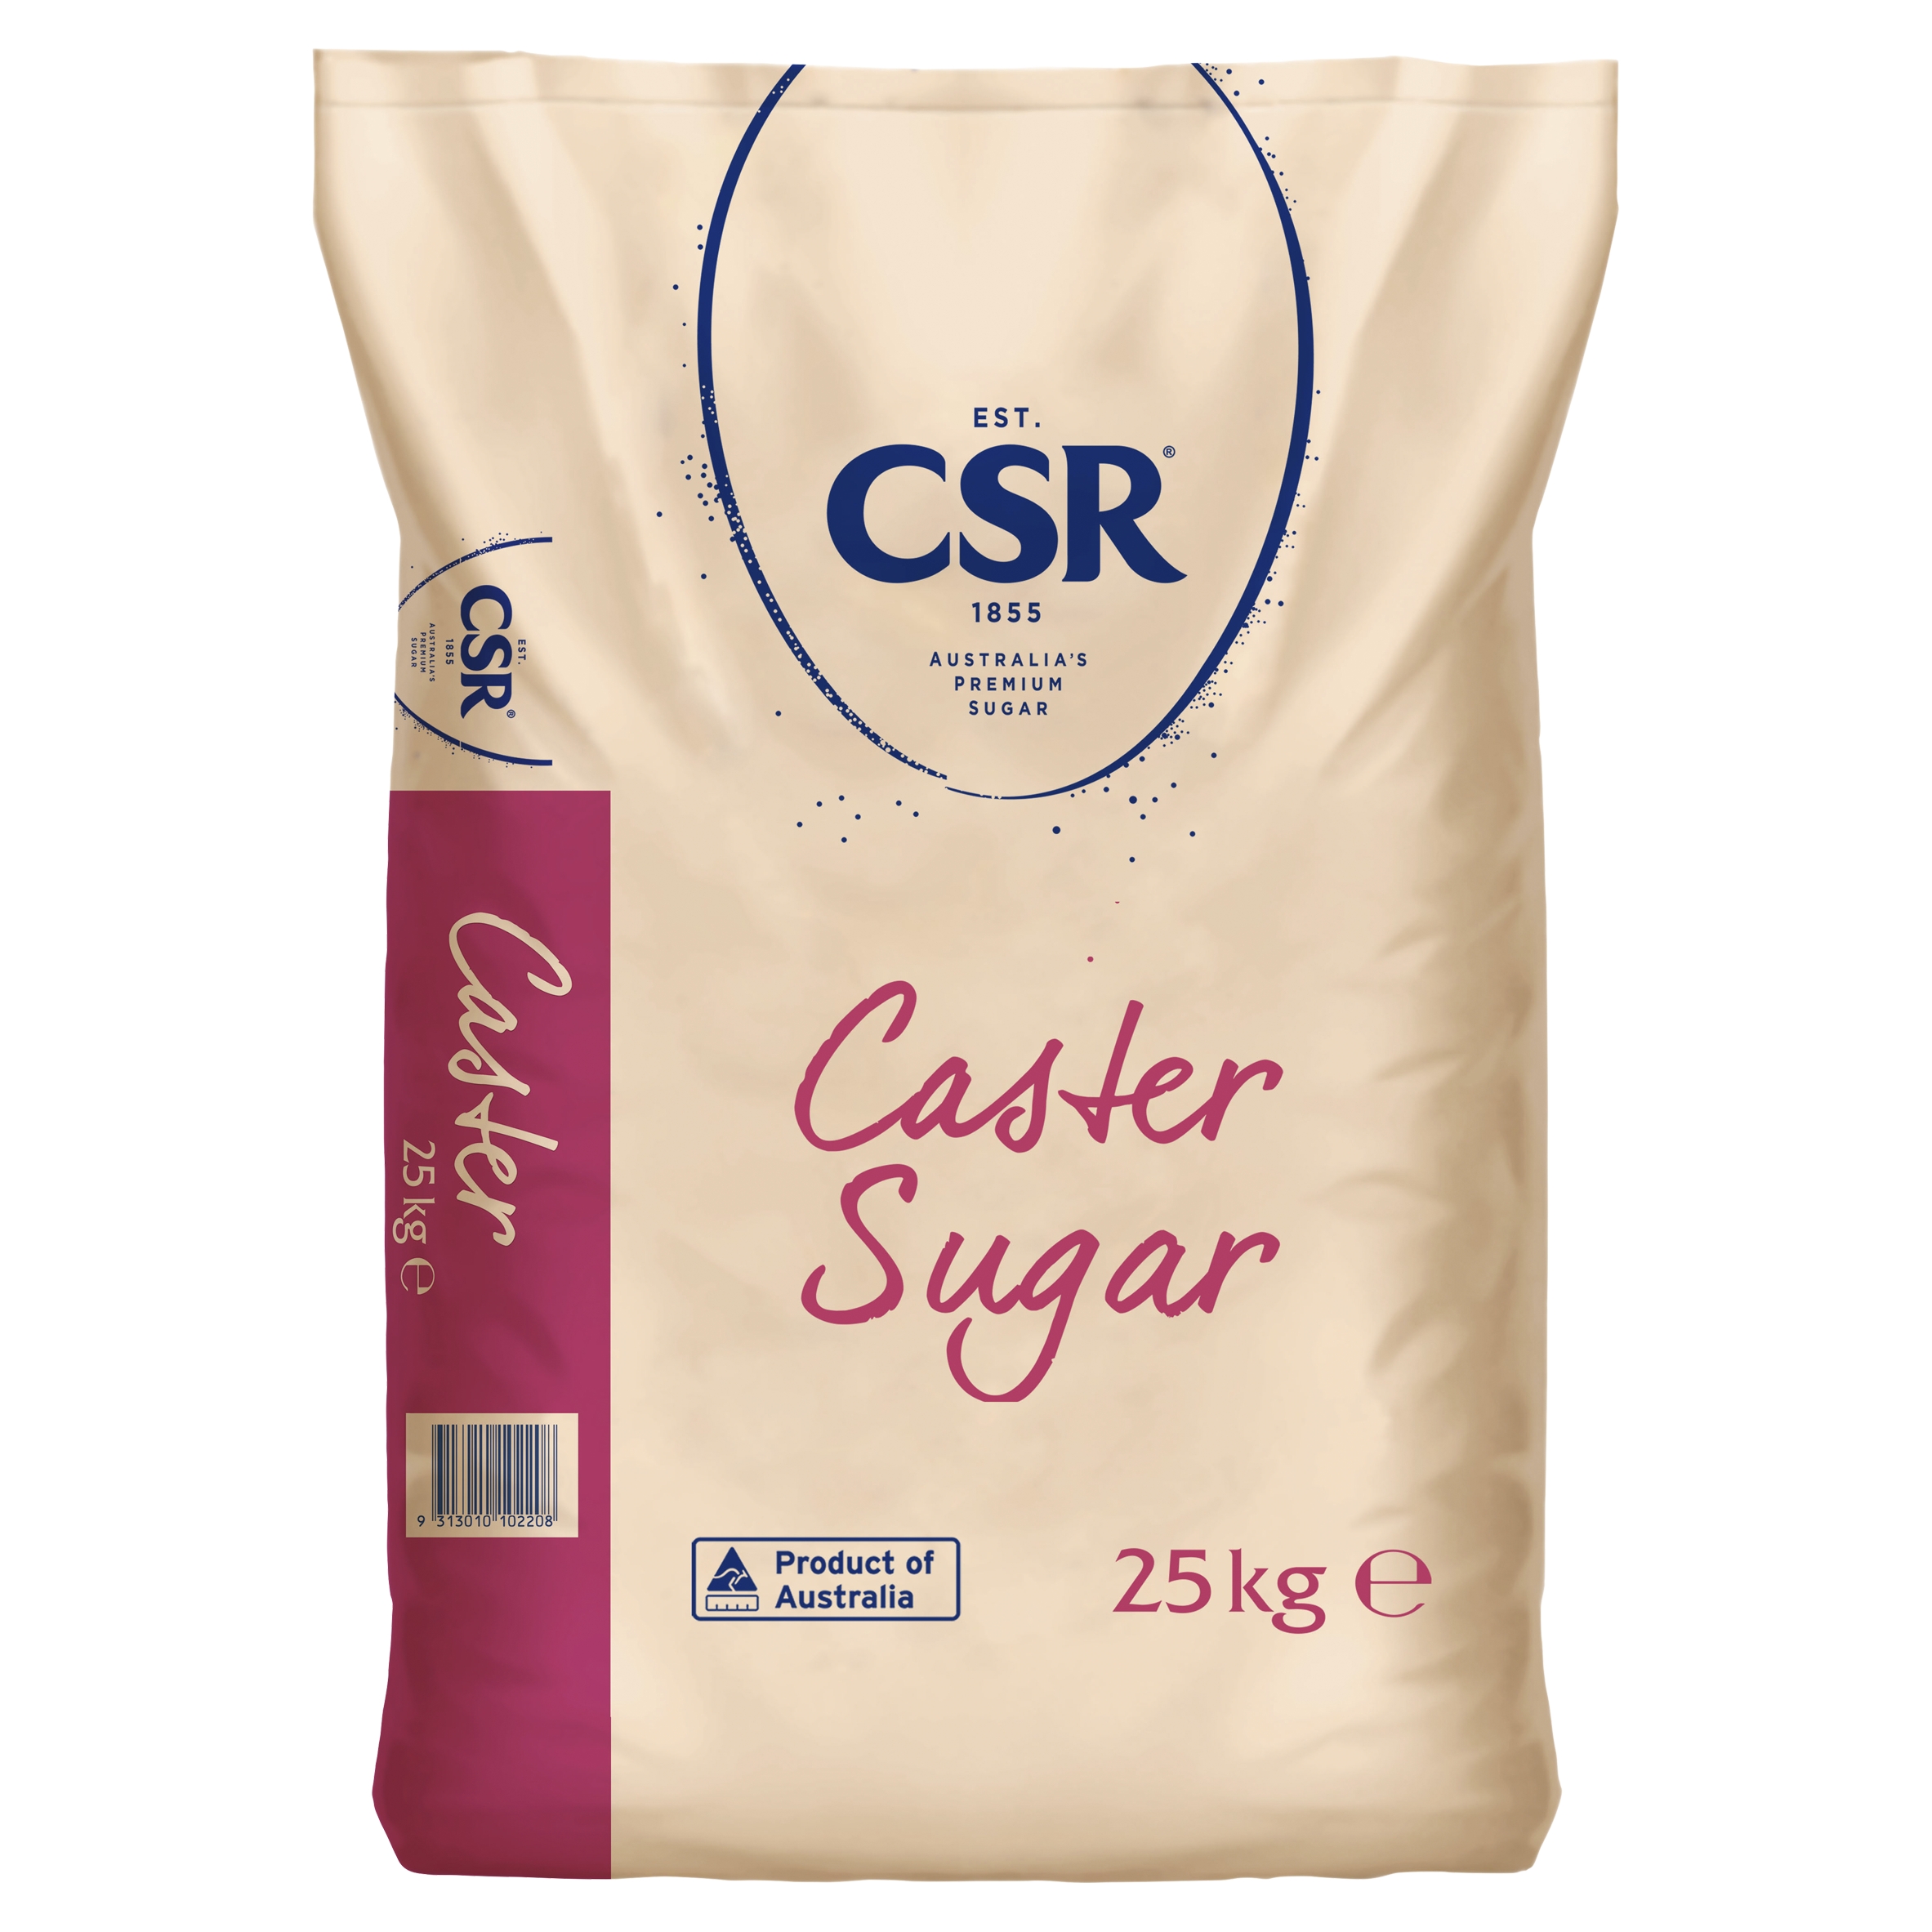 CSR Caster Sugar 25kg